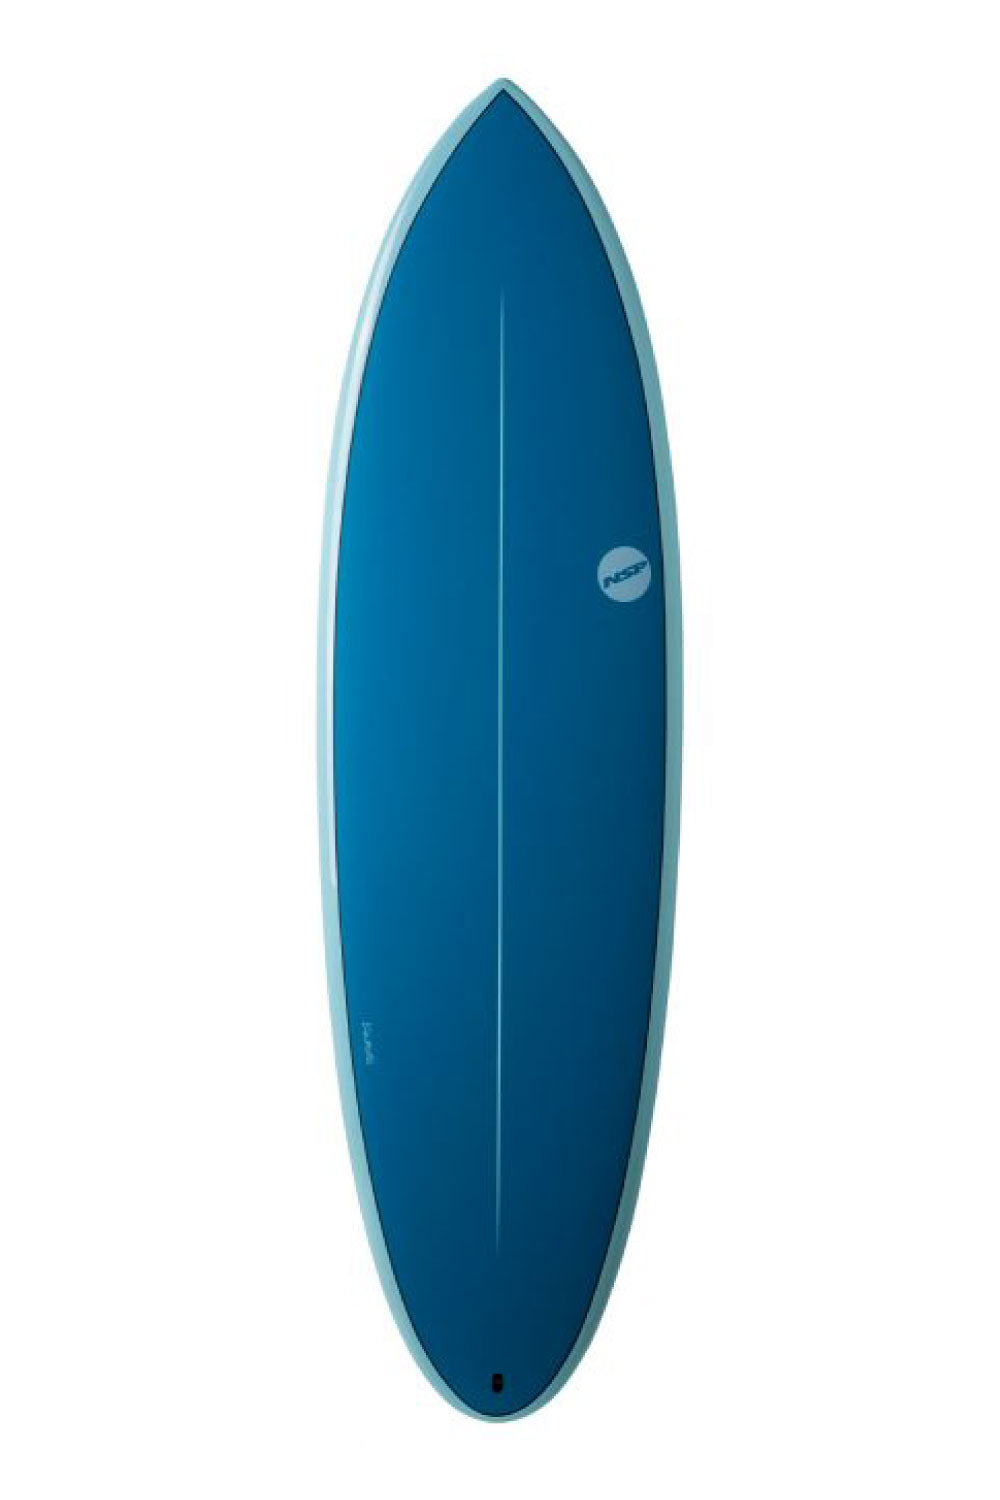 NSP Elements Hybrid Fish Surfboard